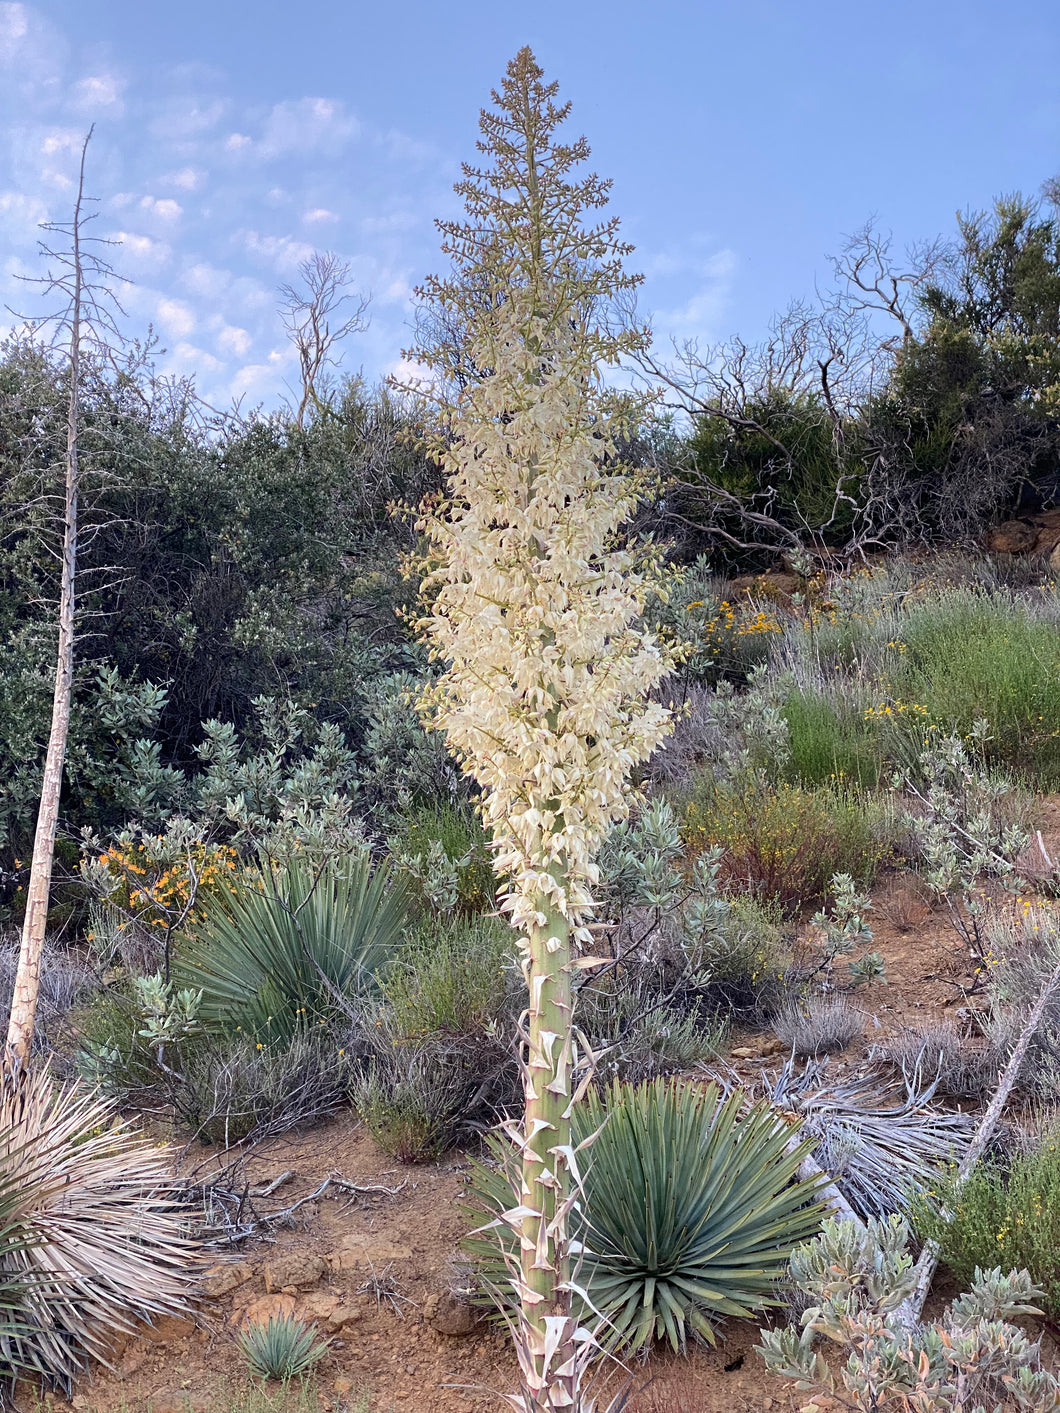 Hesperoyucca whipplei - Chaparral Yucca